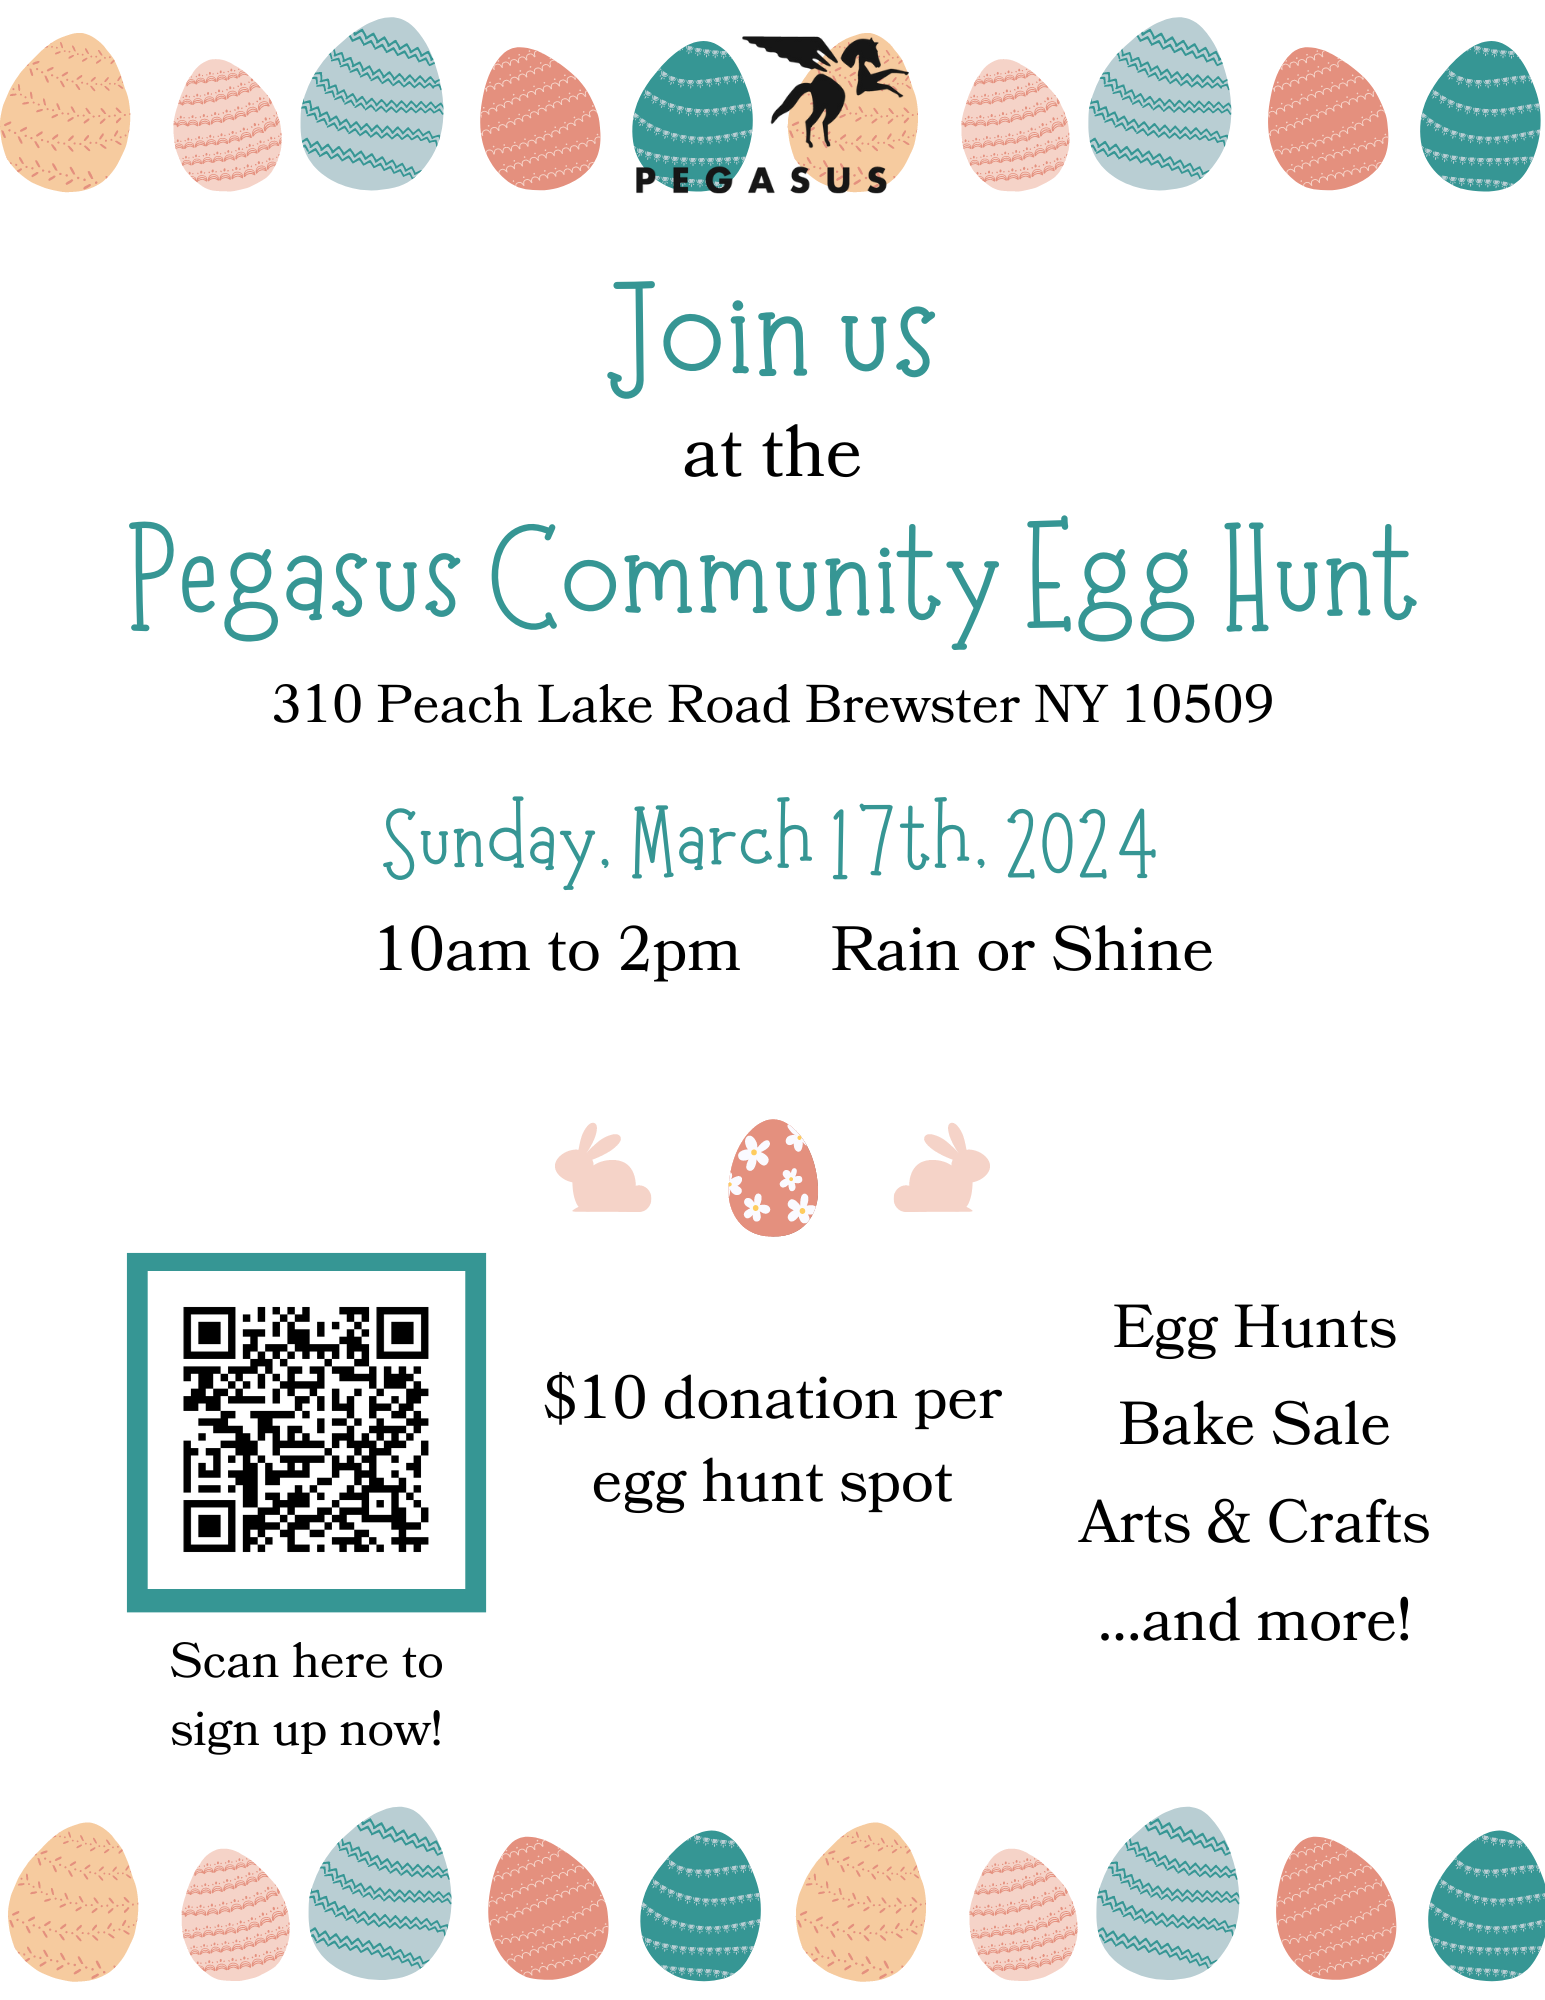 Pegasus Community Egg Hunt